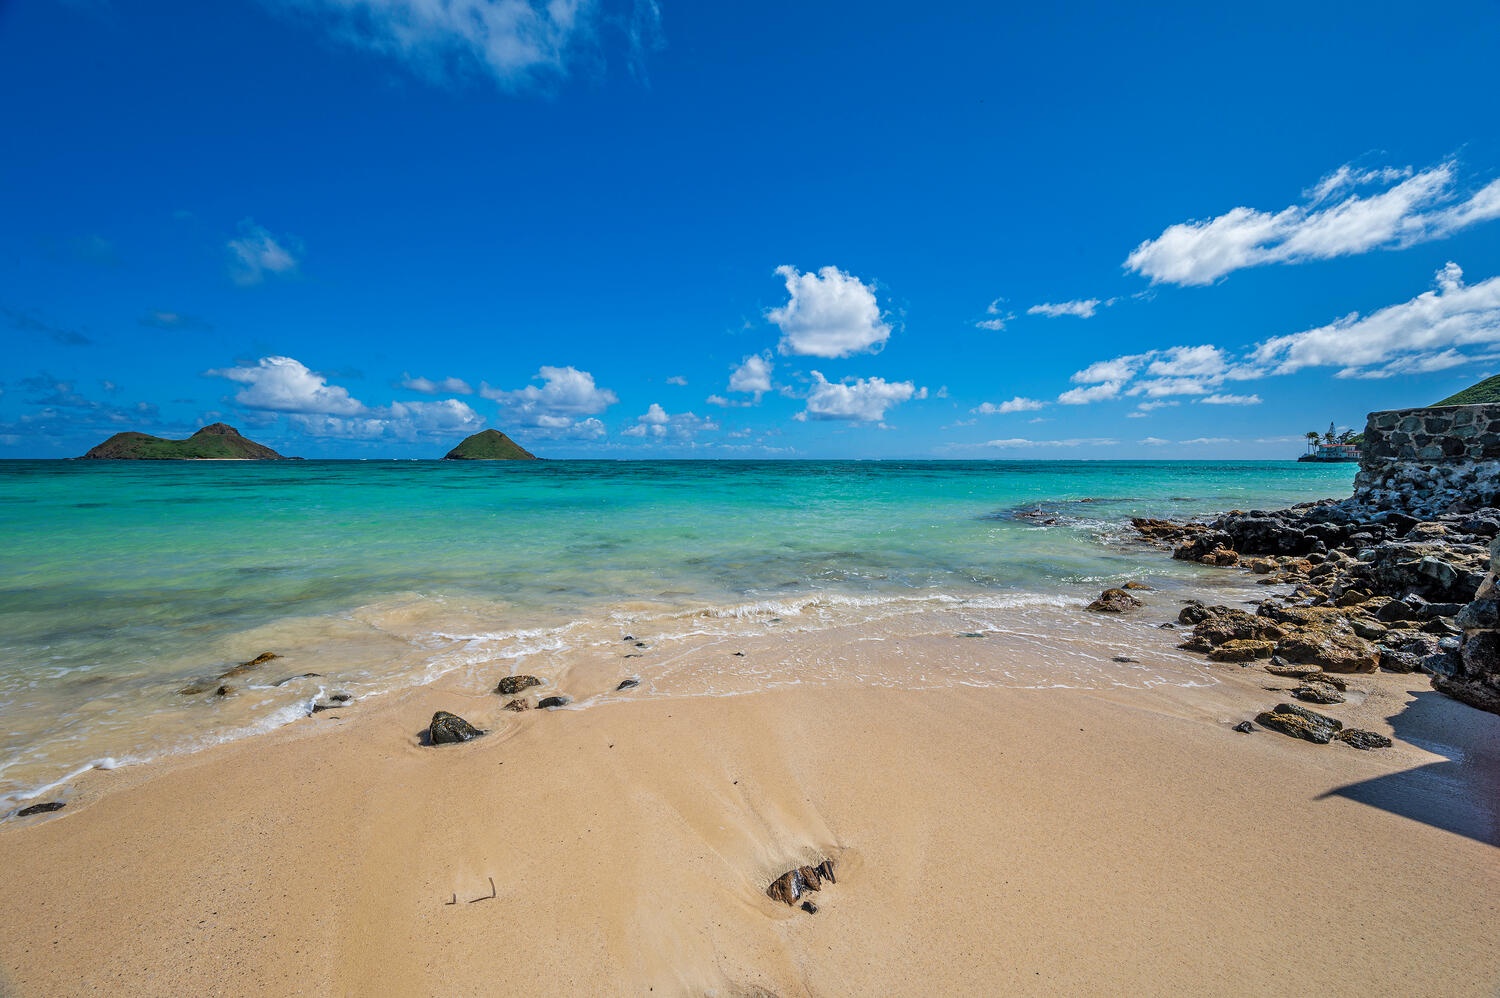 Kailua Vacation Rentals, Villa Hui Hou - Ocean access cove at the end of the beach path